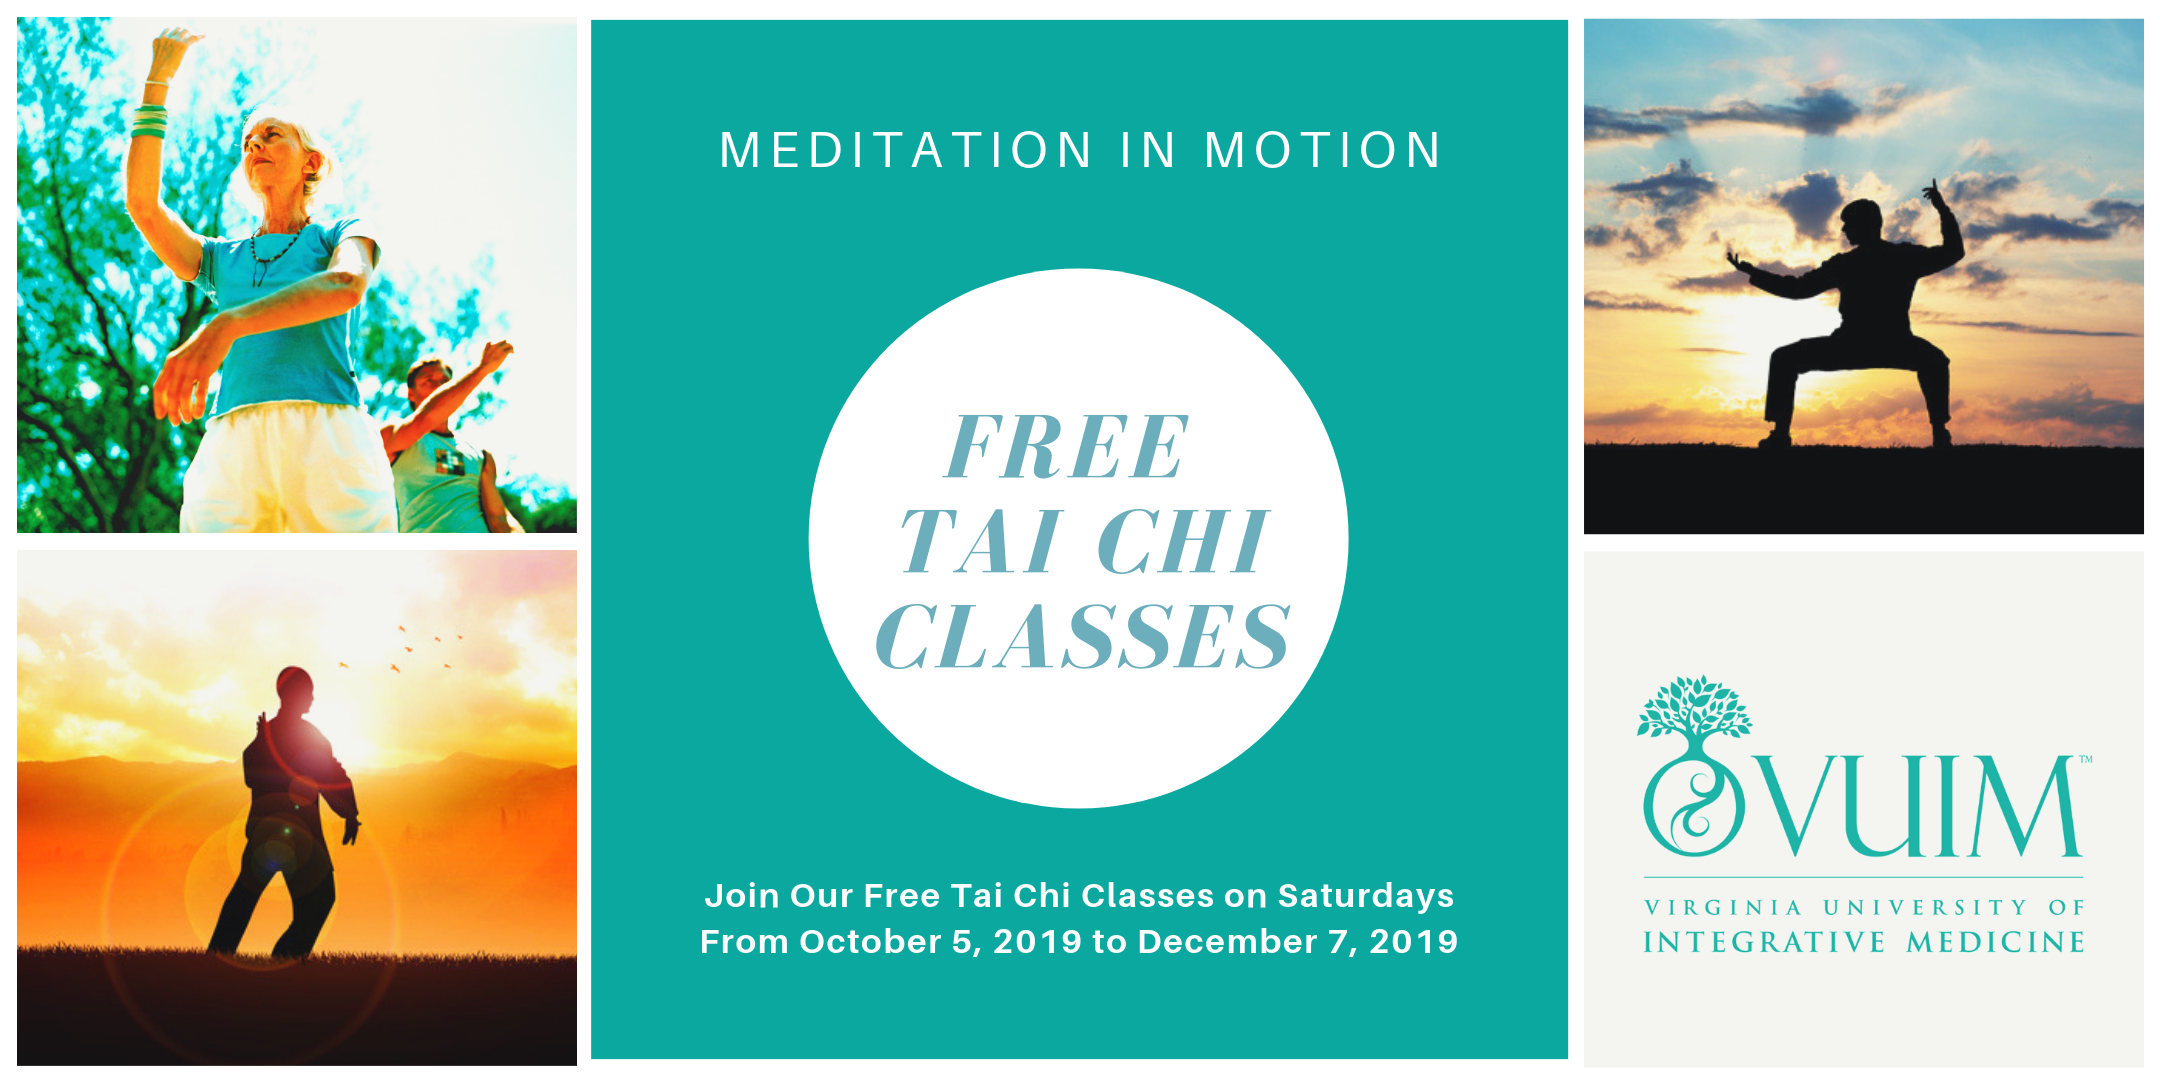 2020 Free Tai Chi Classes at Virginia University of Integrative Medicine